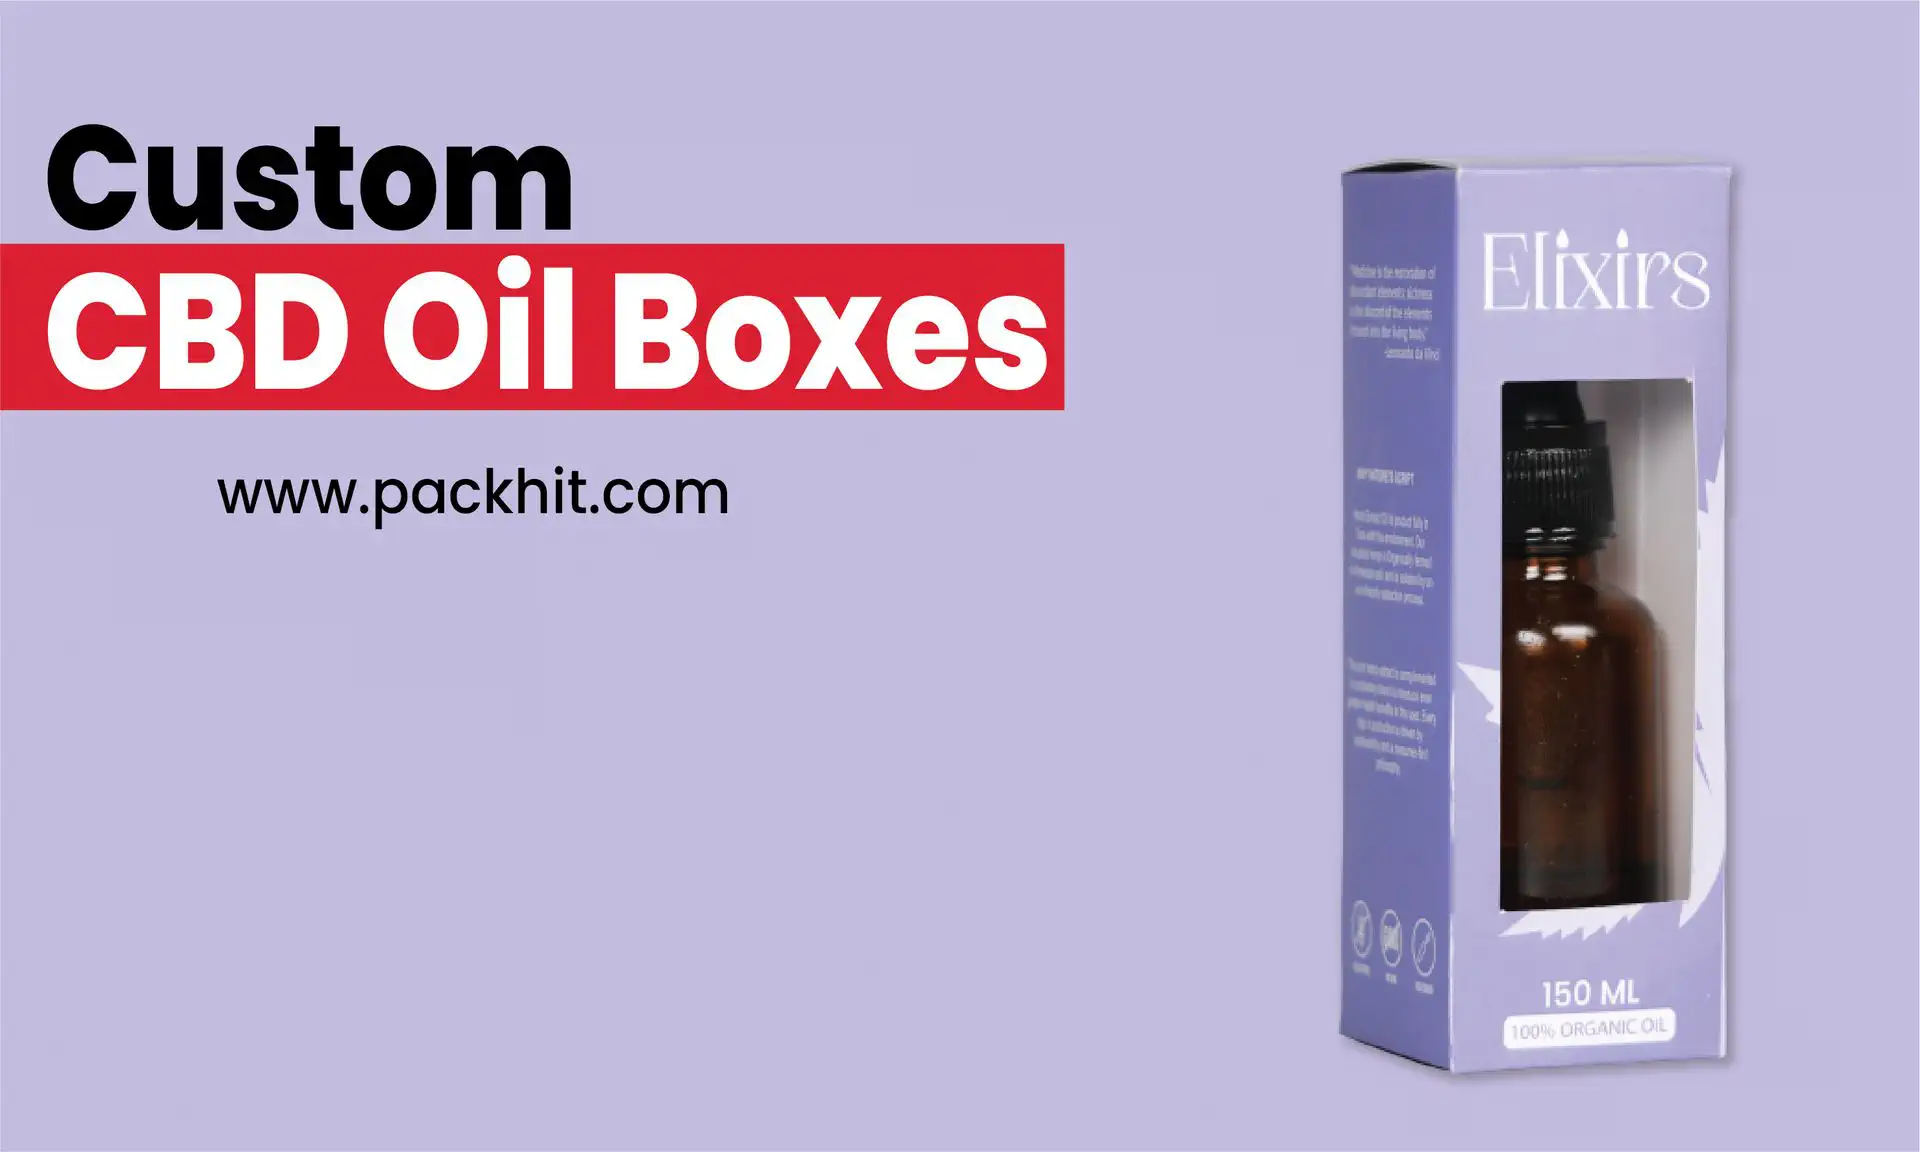 Custom CBD Oil Boxes with window